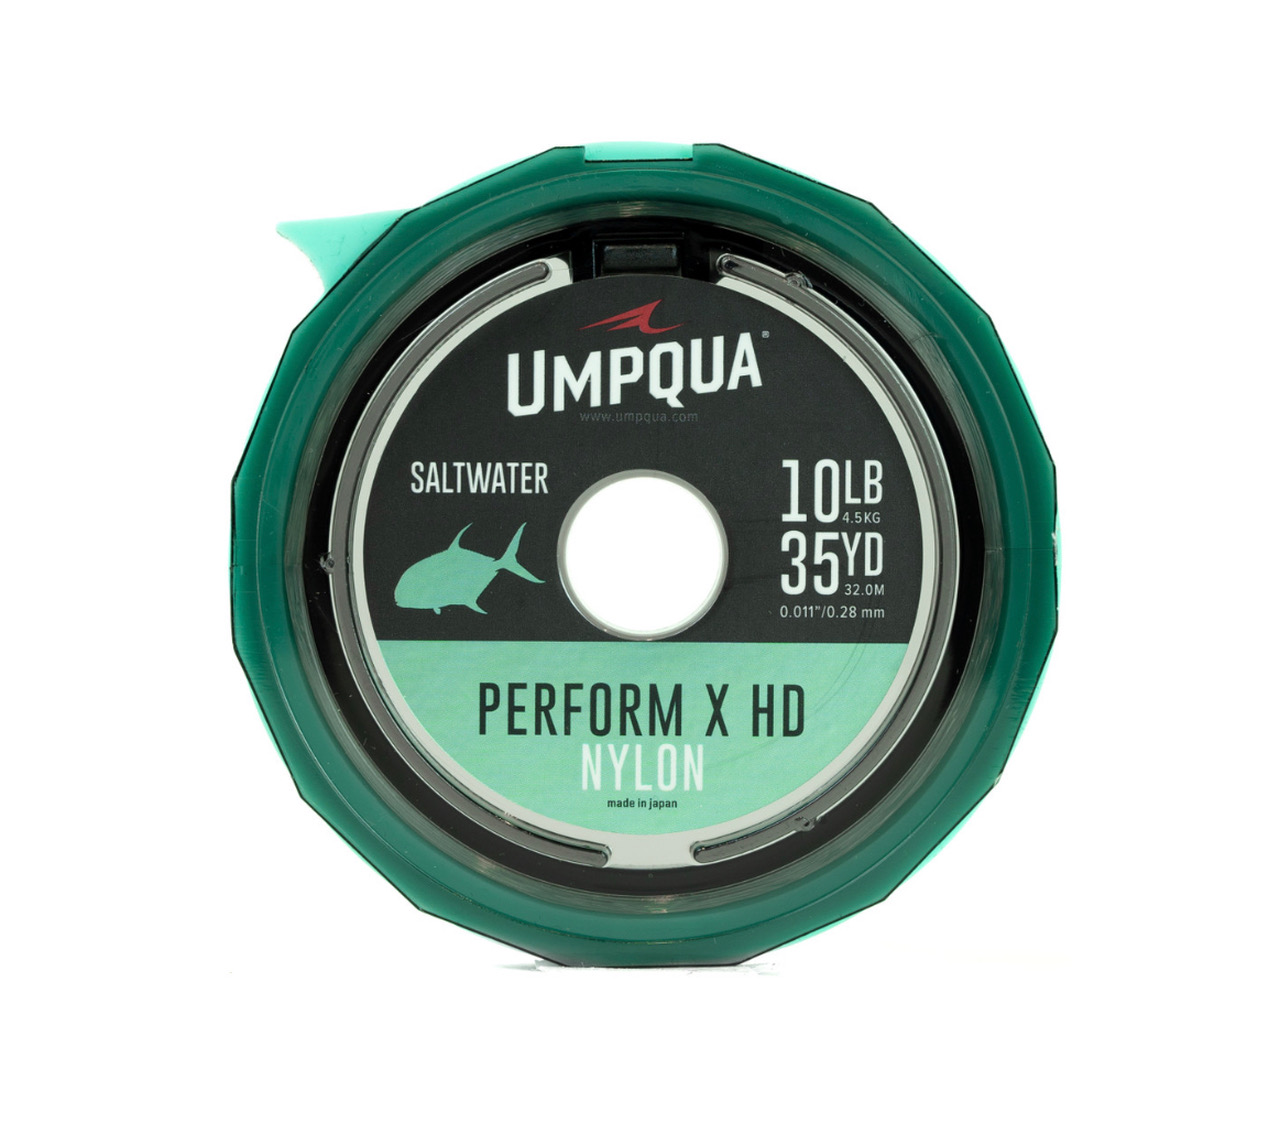 Umpqua Perform X HD Saltwater Nylon Tippet - 15yd - 35lb